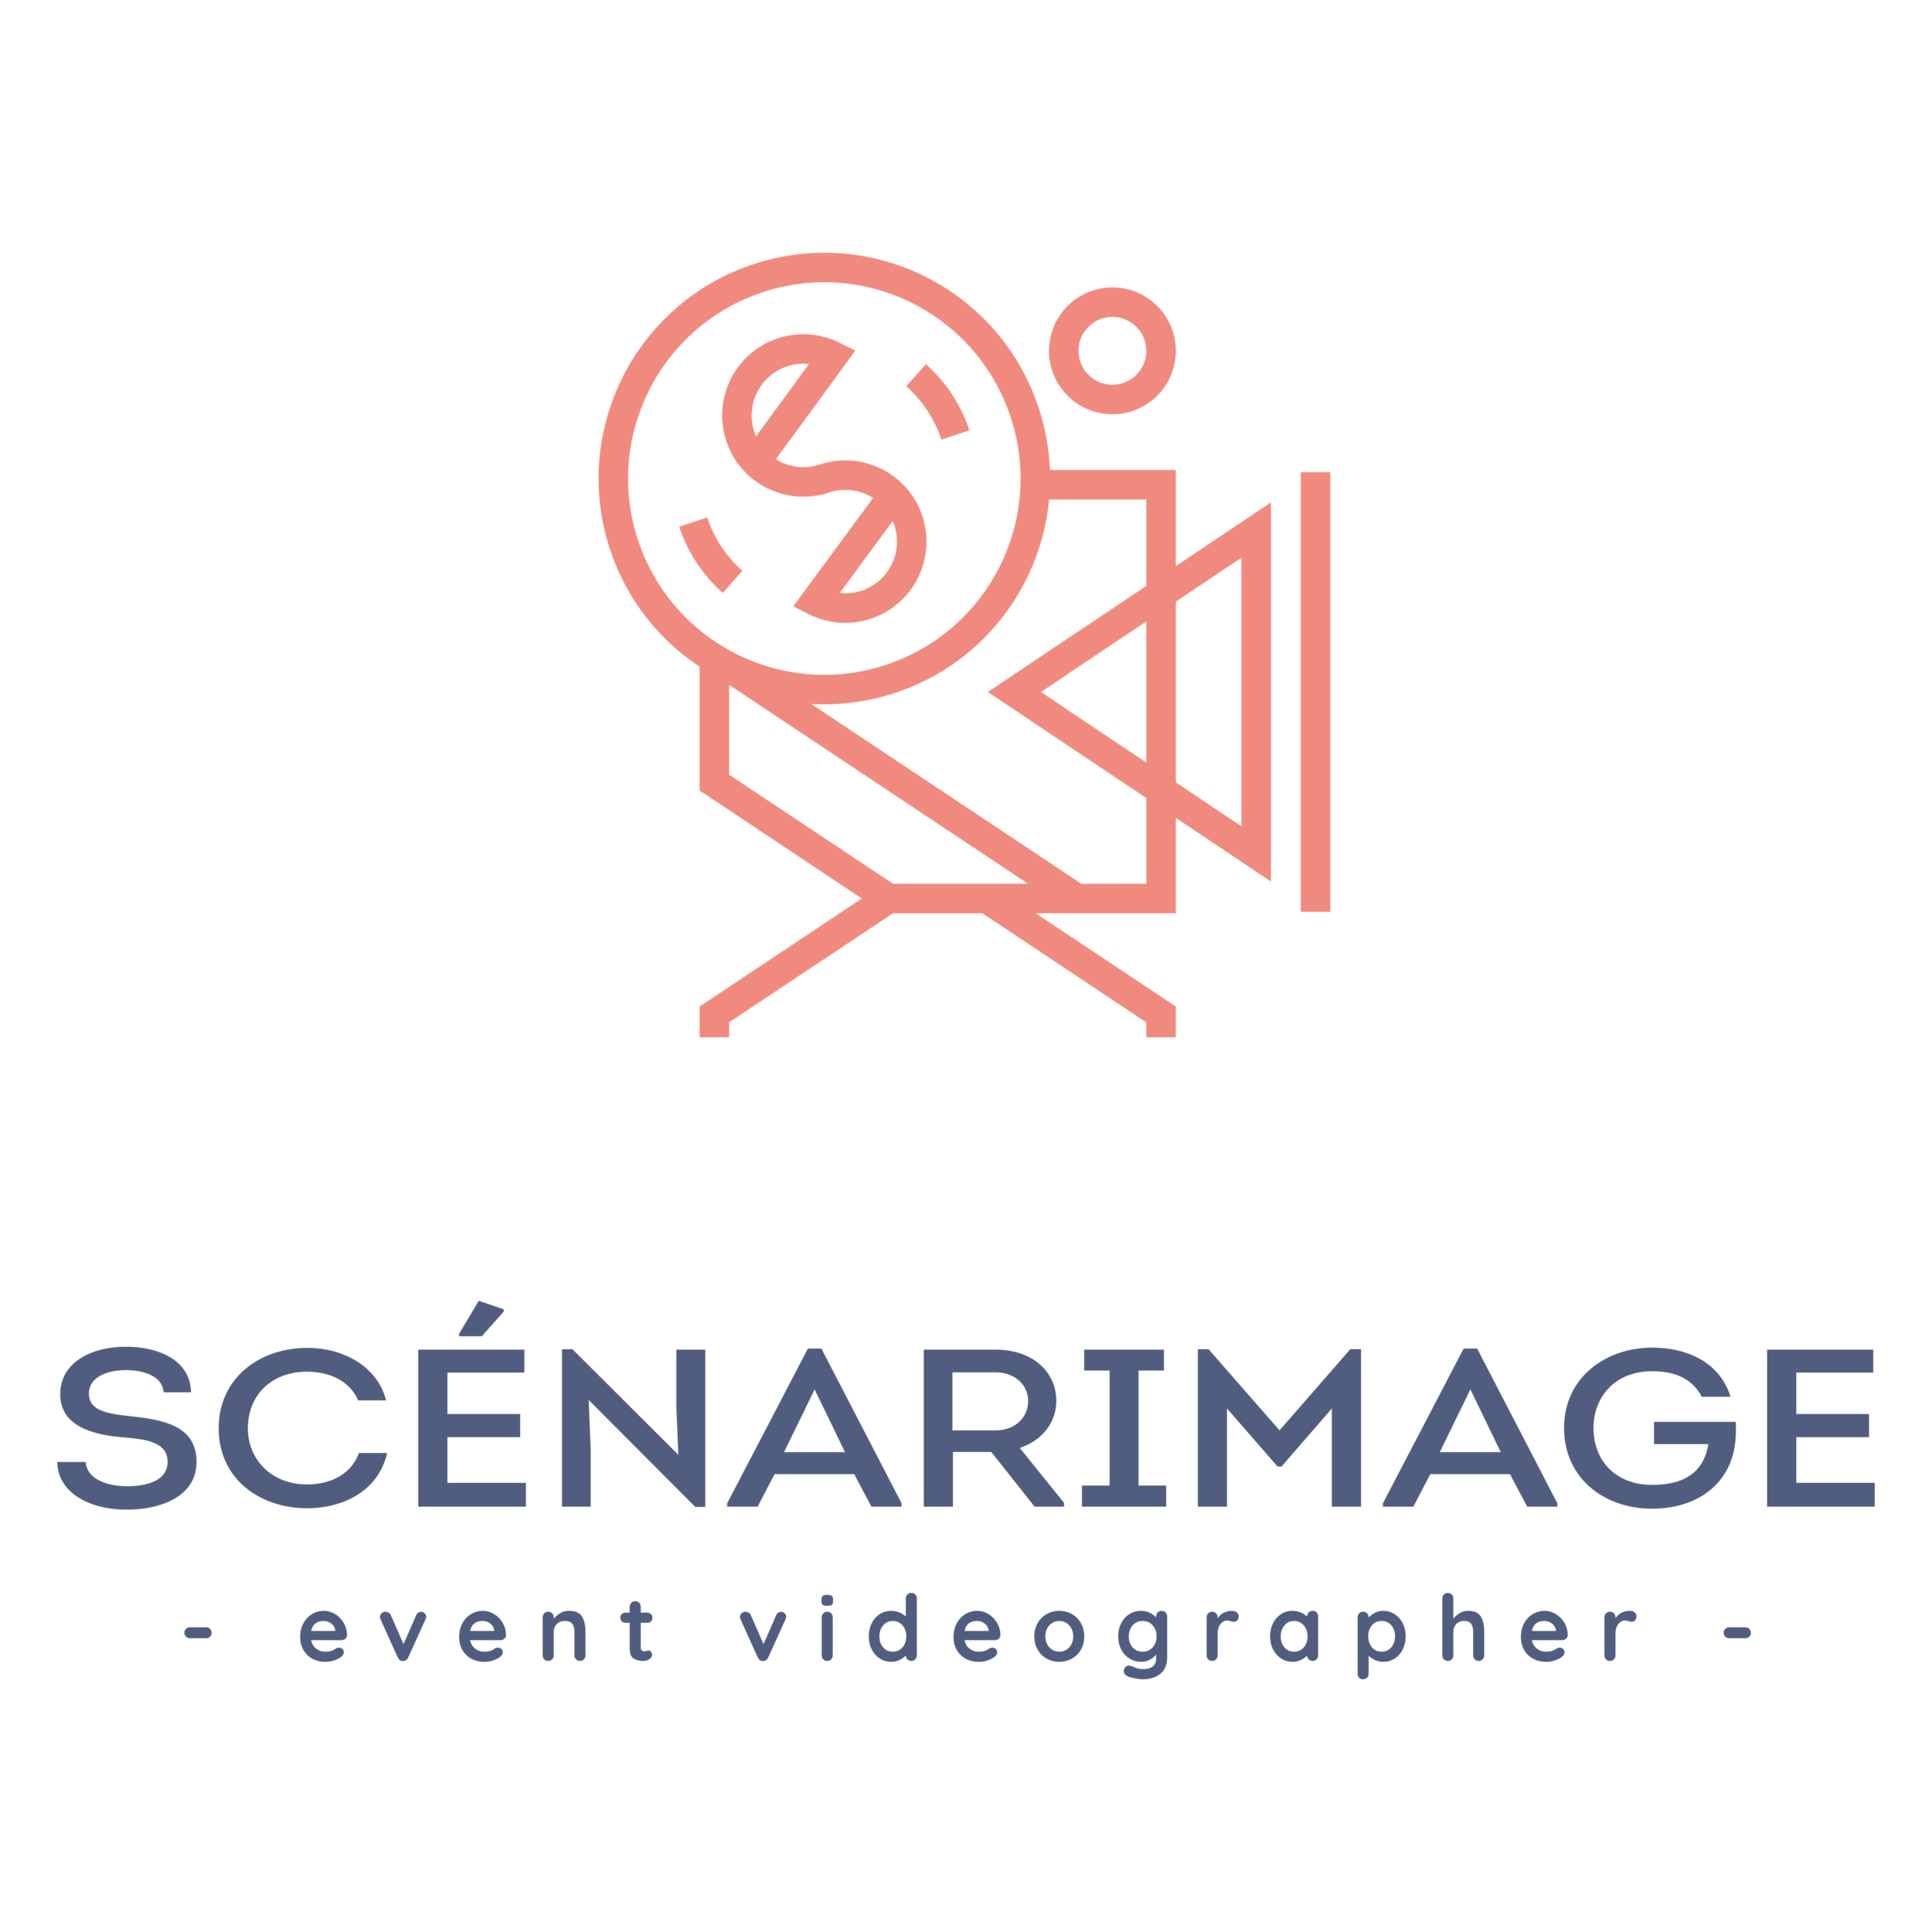 Scenarimage.com